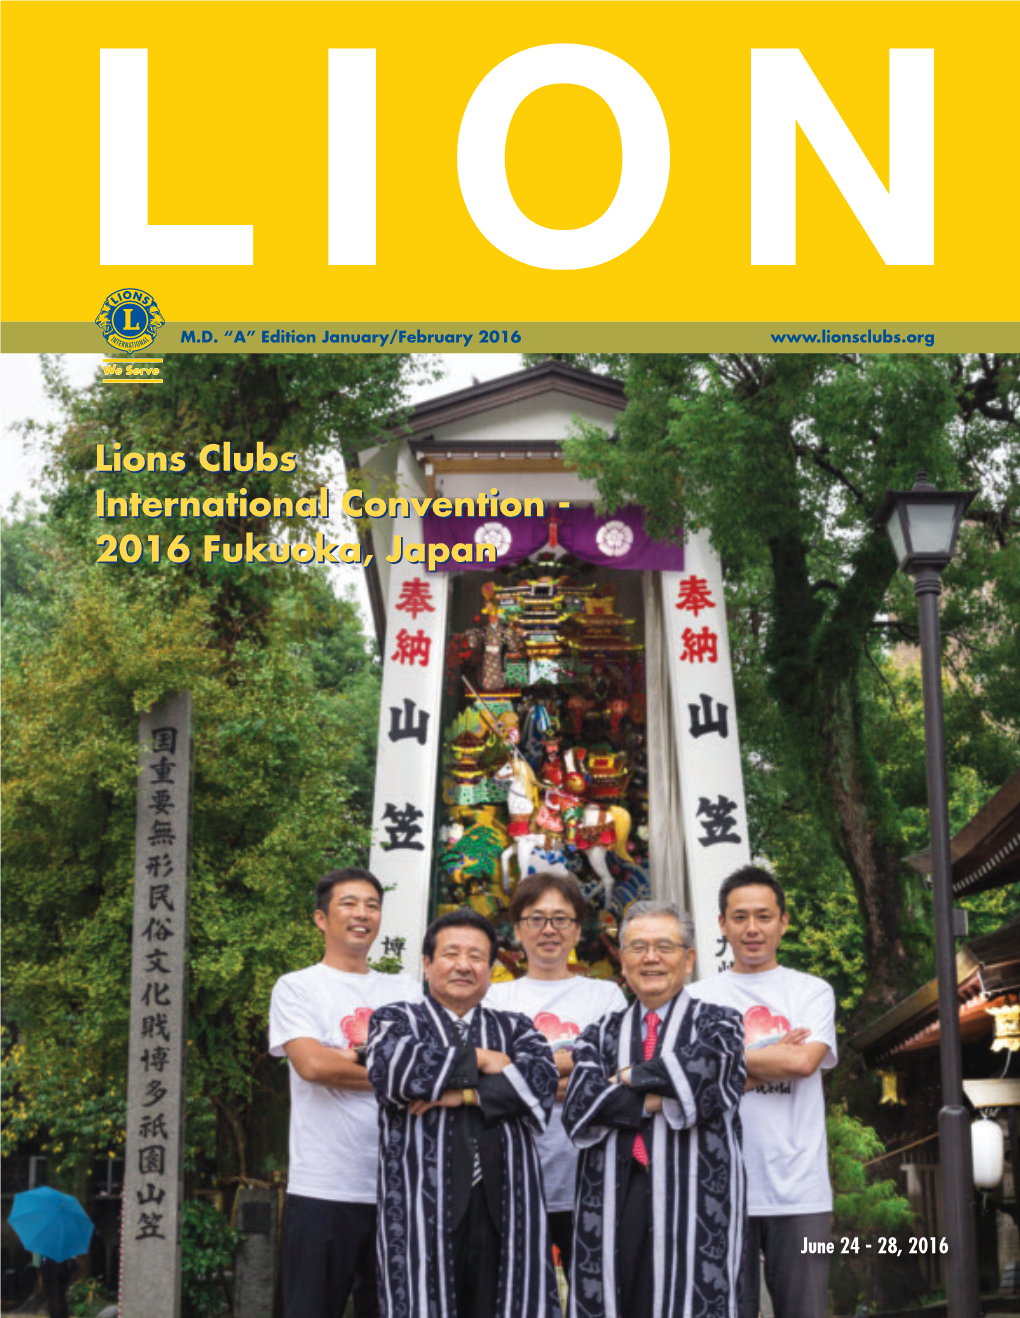 Lions Clubs International Convention - 2016 Fukuoka, Japan